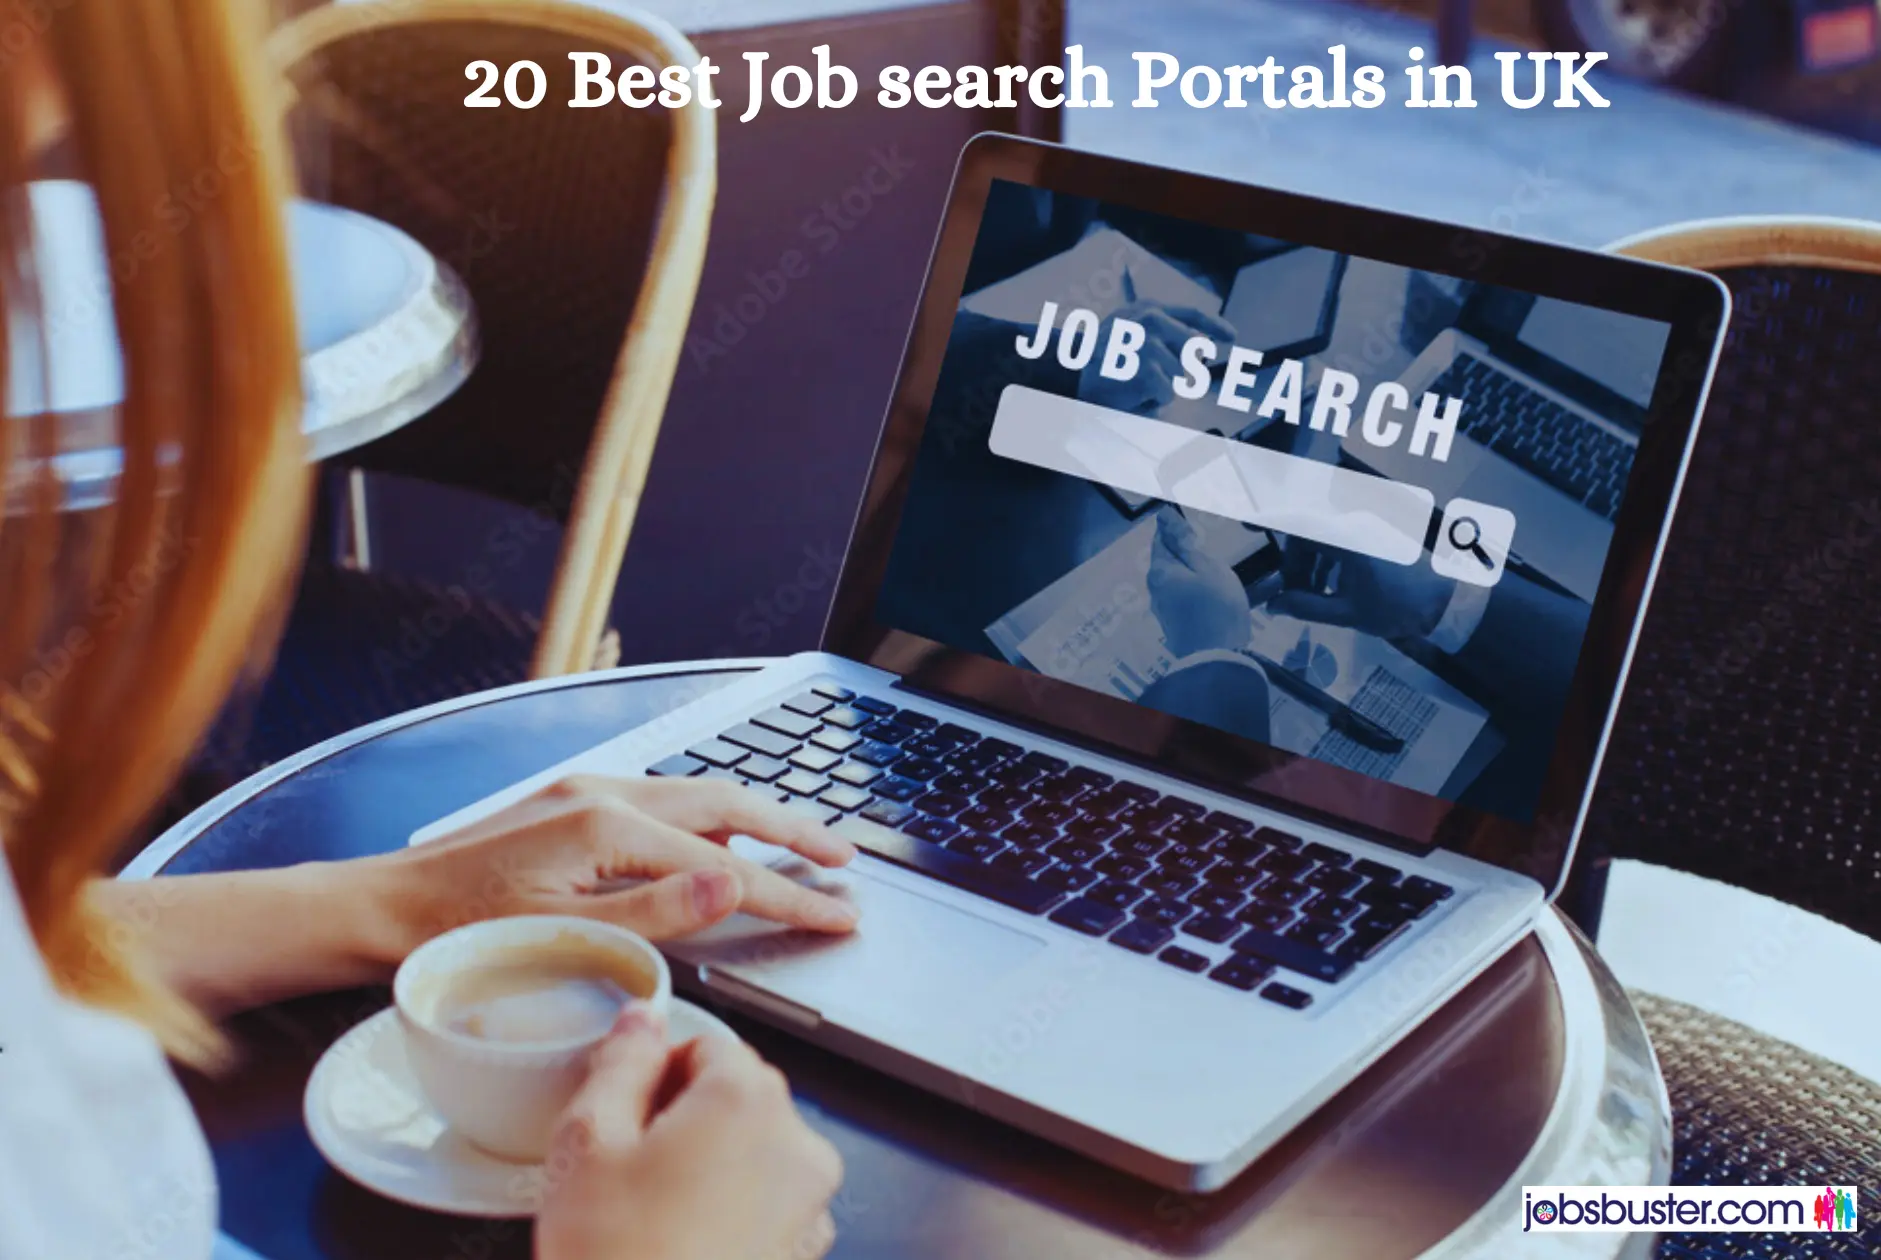 20 Best Job search Portals in UK